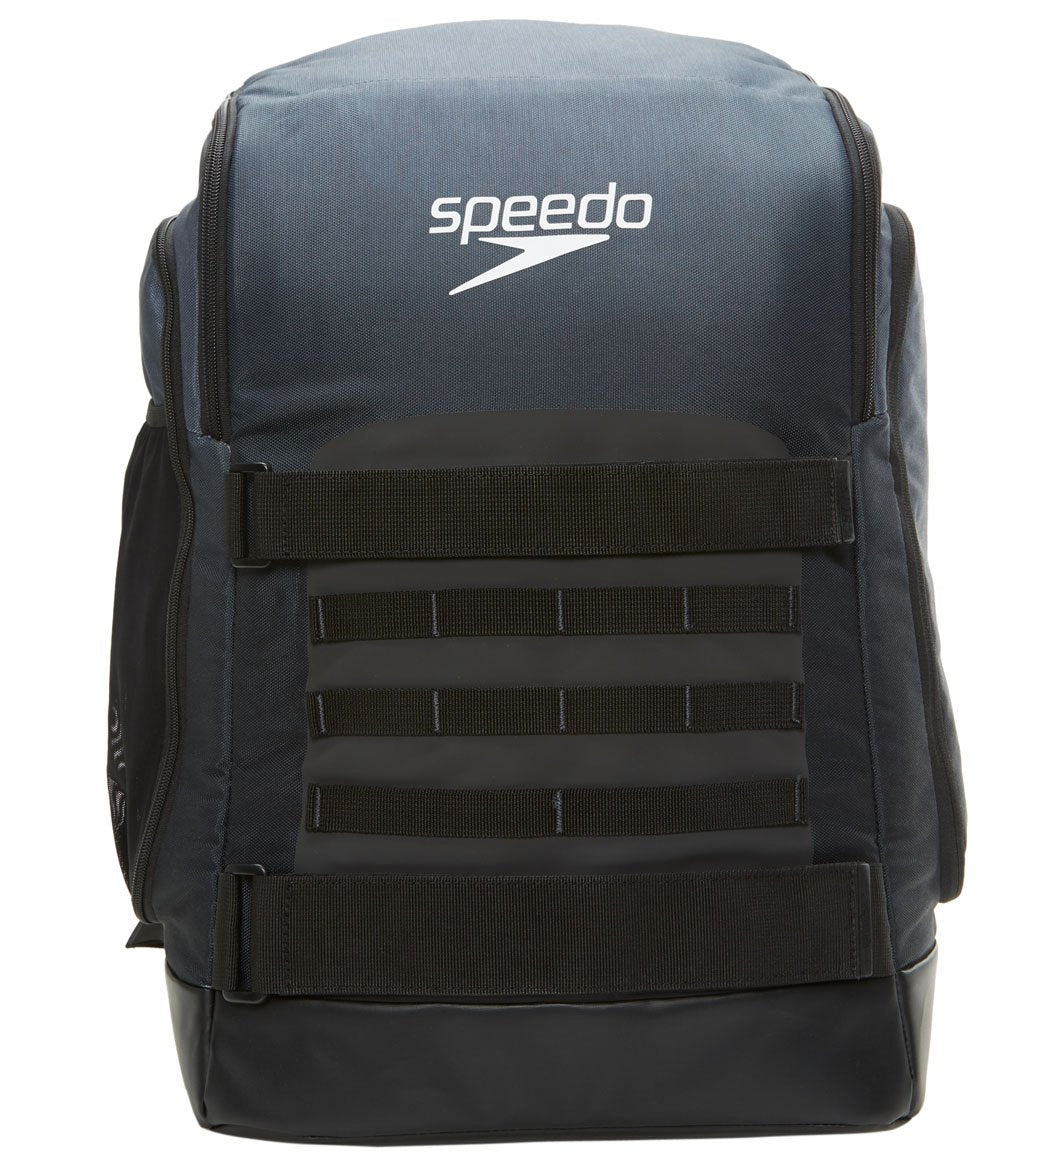 Speedo Teamster 40 L Pro Backpack at SwimOutlet.com